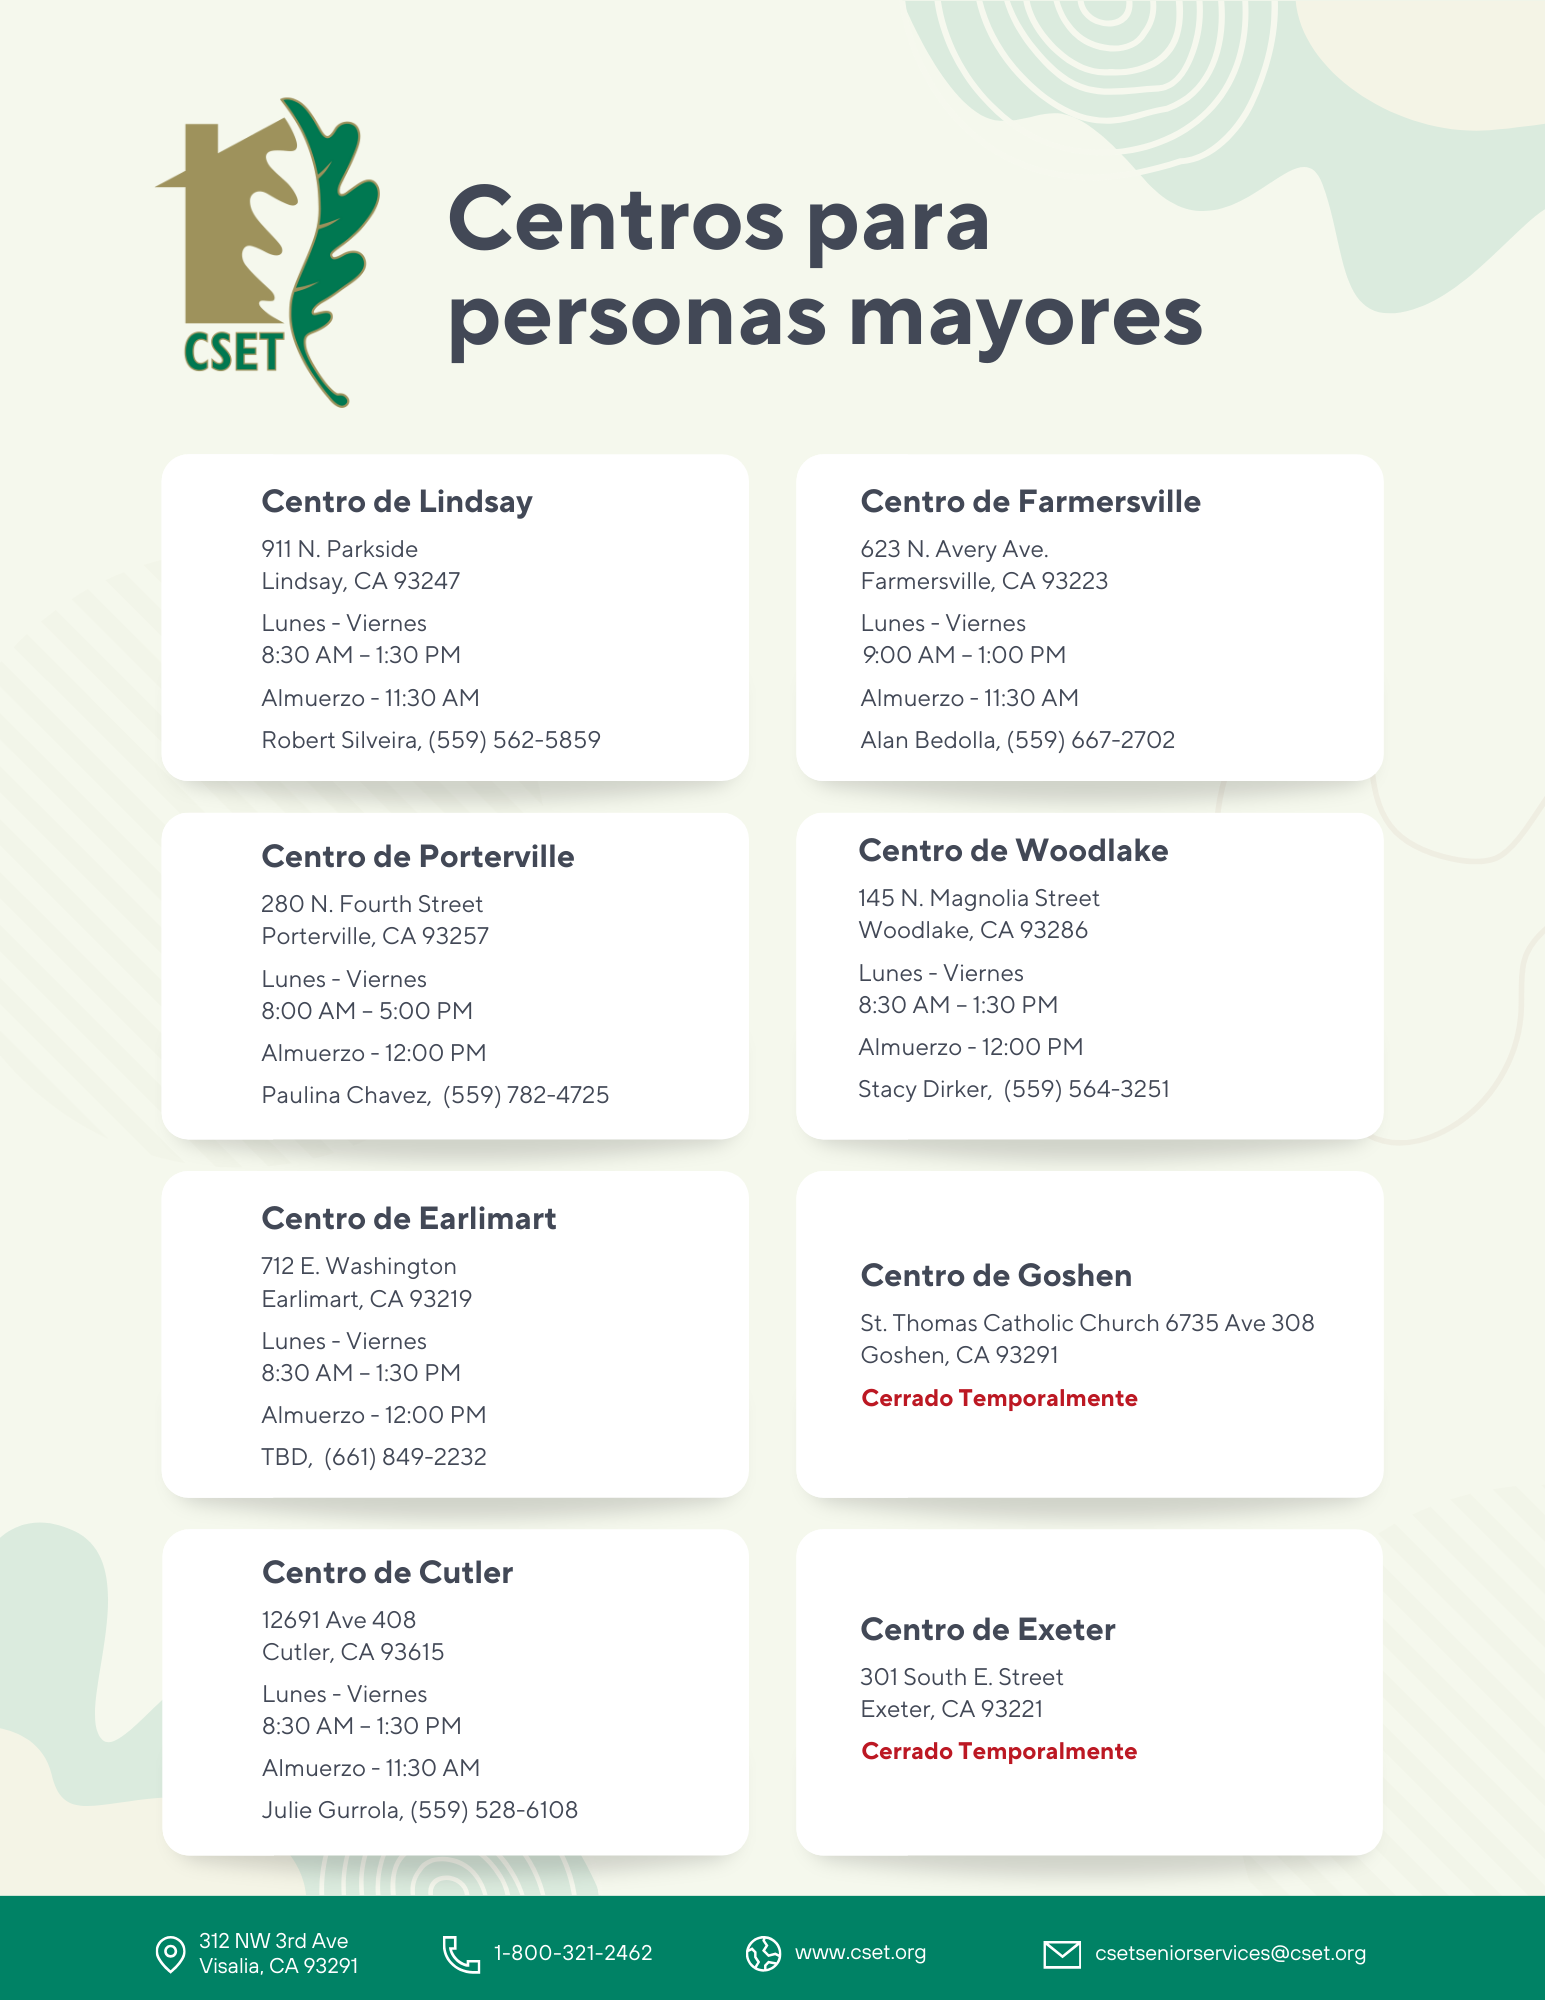 CSET Senior Centers Directory (Spanish).png